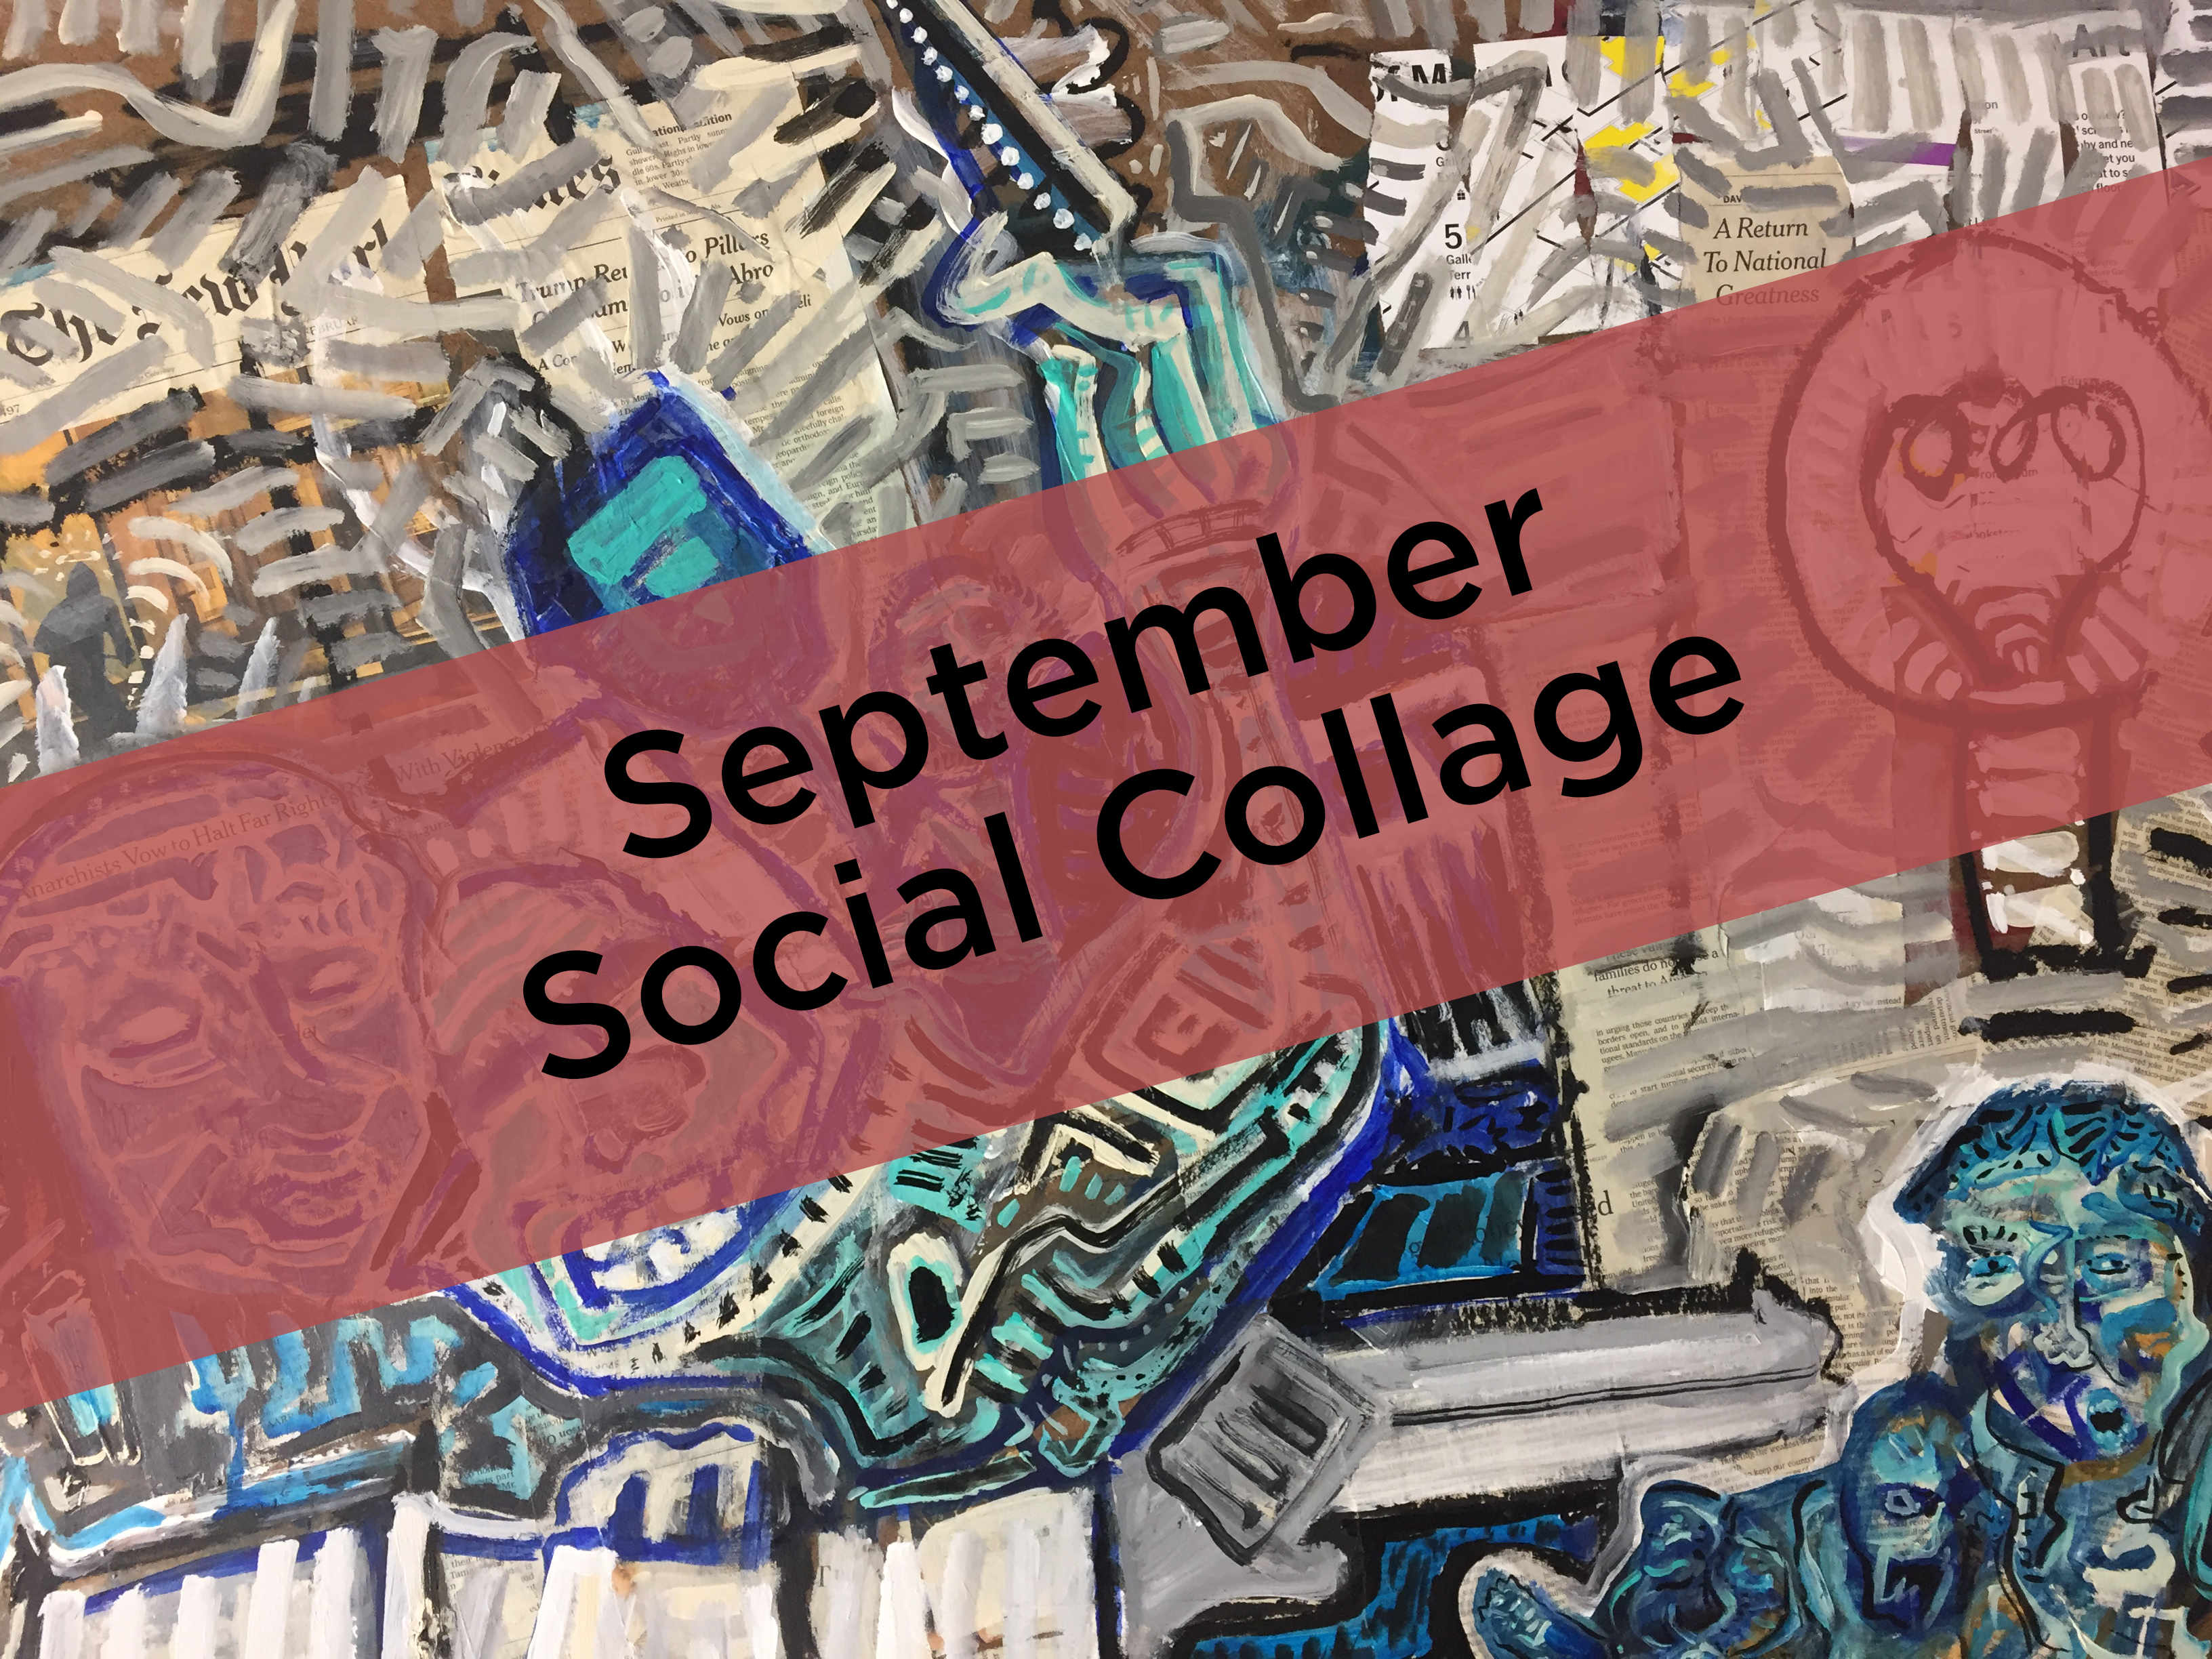 Sept. Social Collage